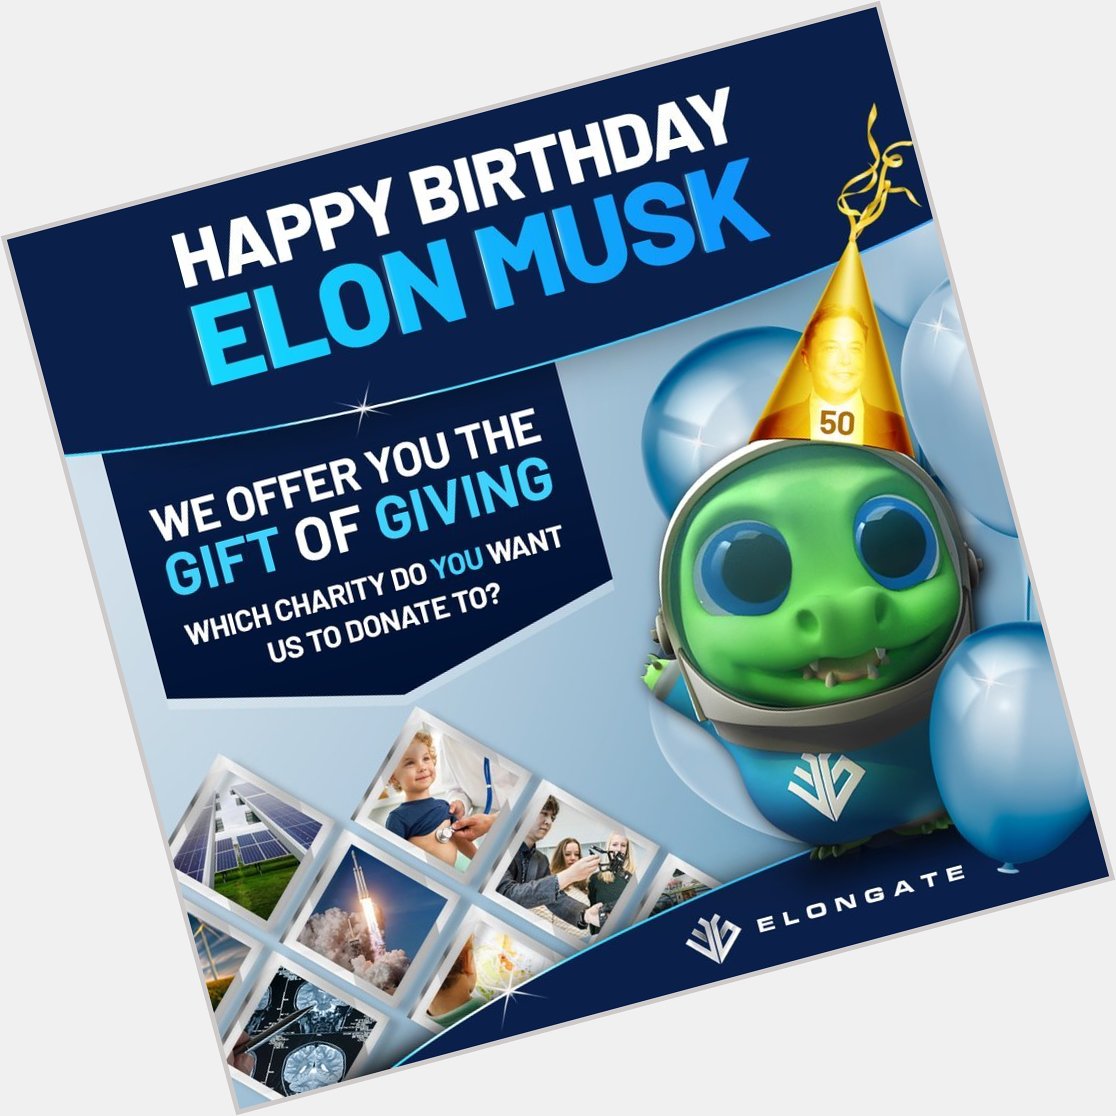   Happy birthday Sir Elon Musk
love from the adorable Enzo the Elongator 